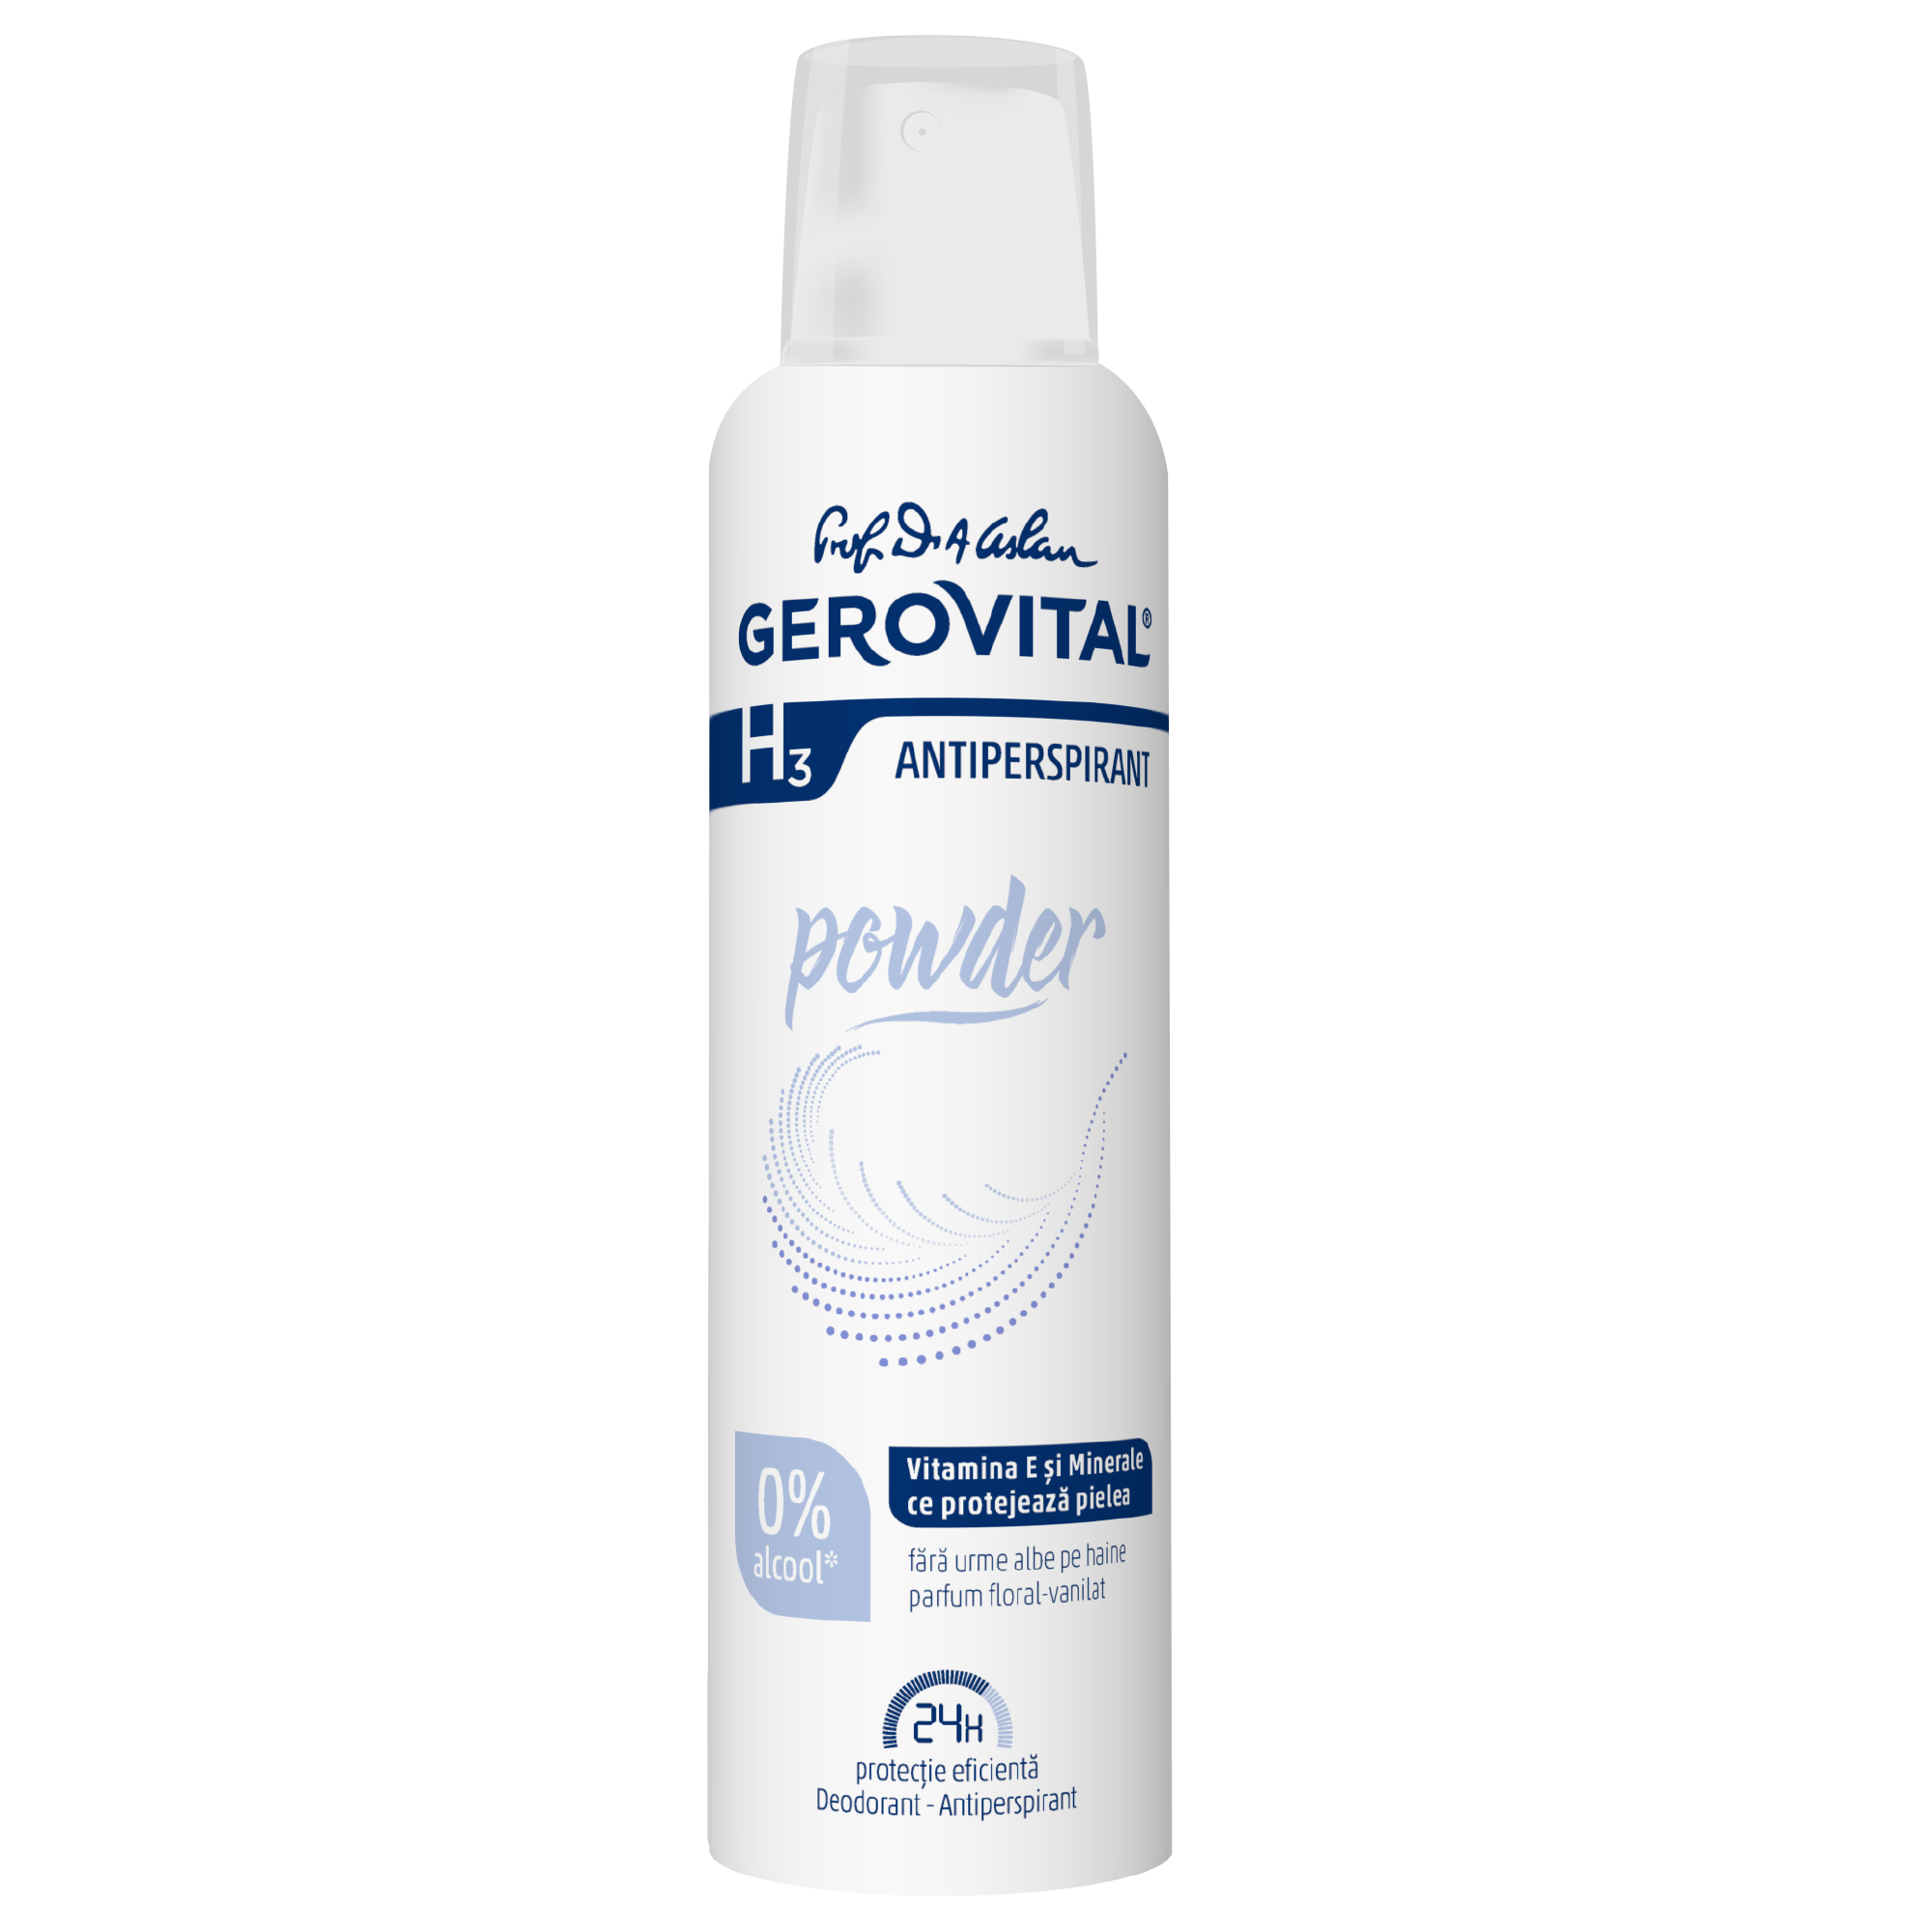 Deodorant spray Gerovital H3 Antiperspirant, Powder, 150 ml, Gerovital